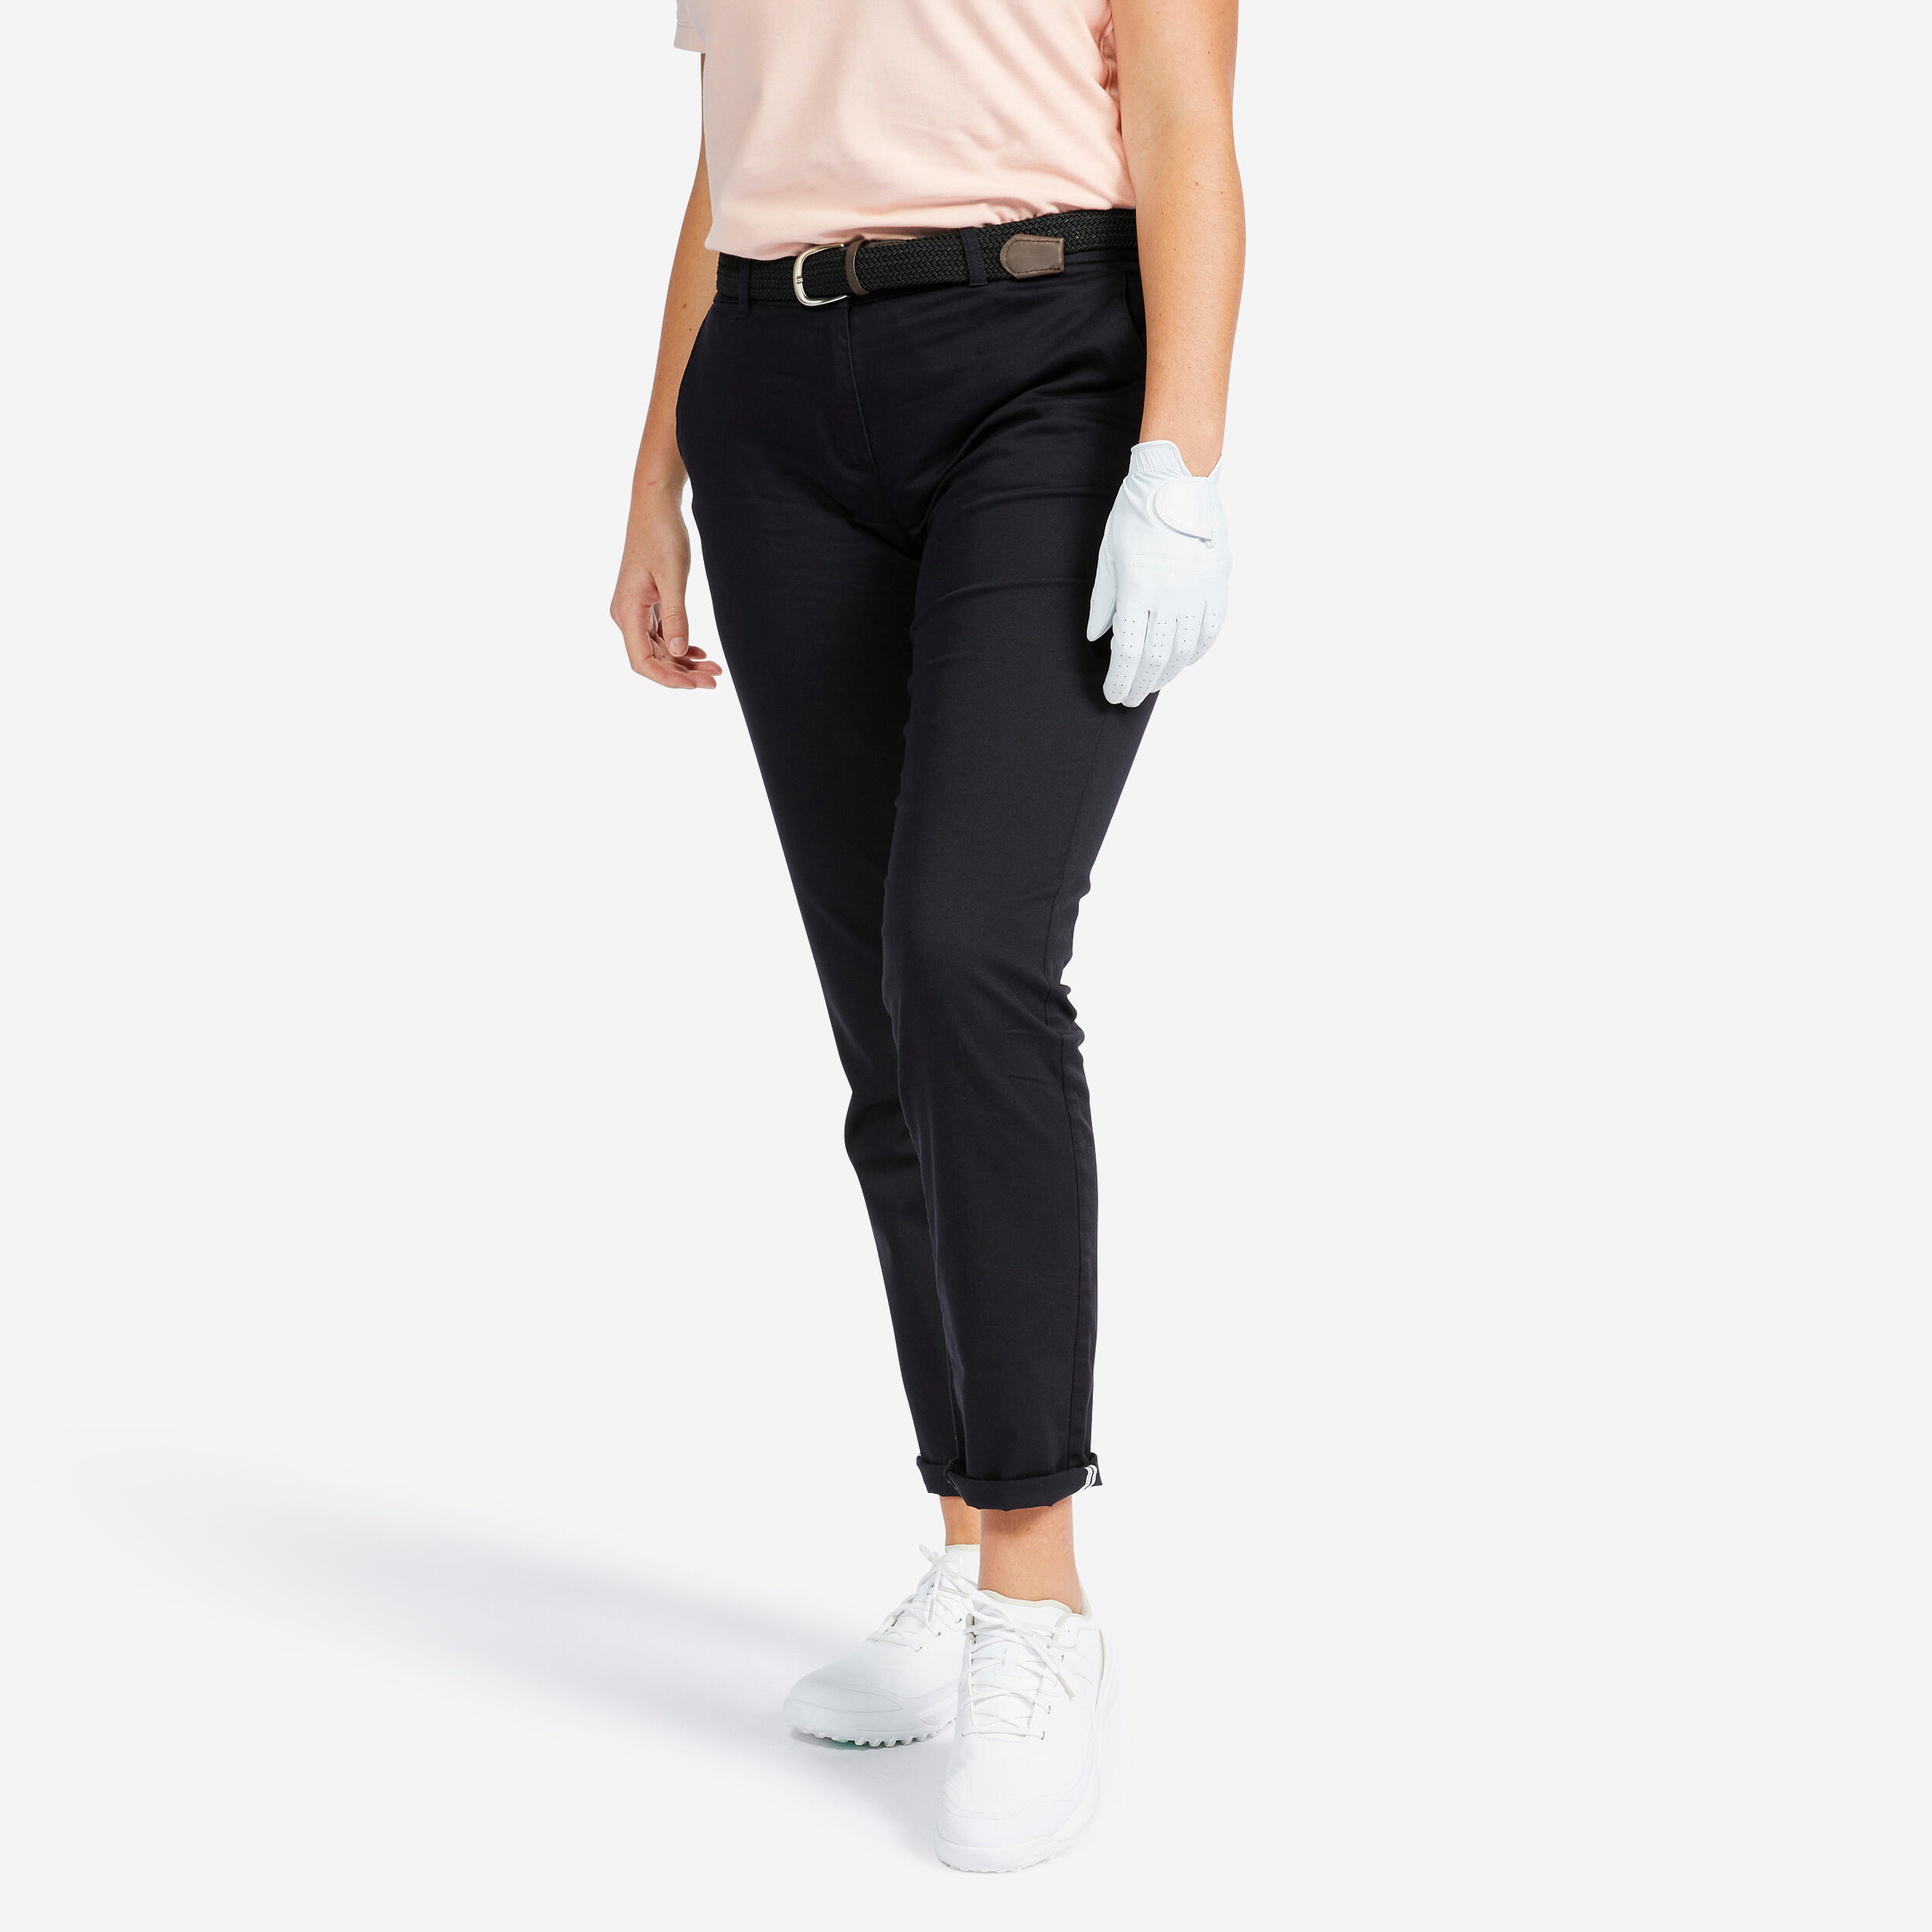 INESIS Women's Golf Trousers - MW500 Black